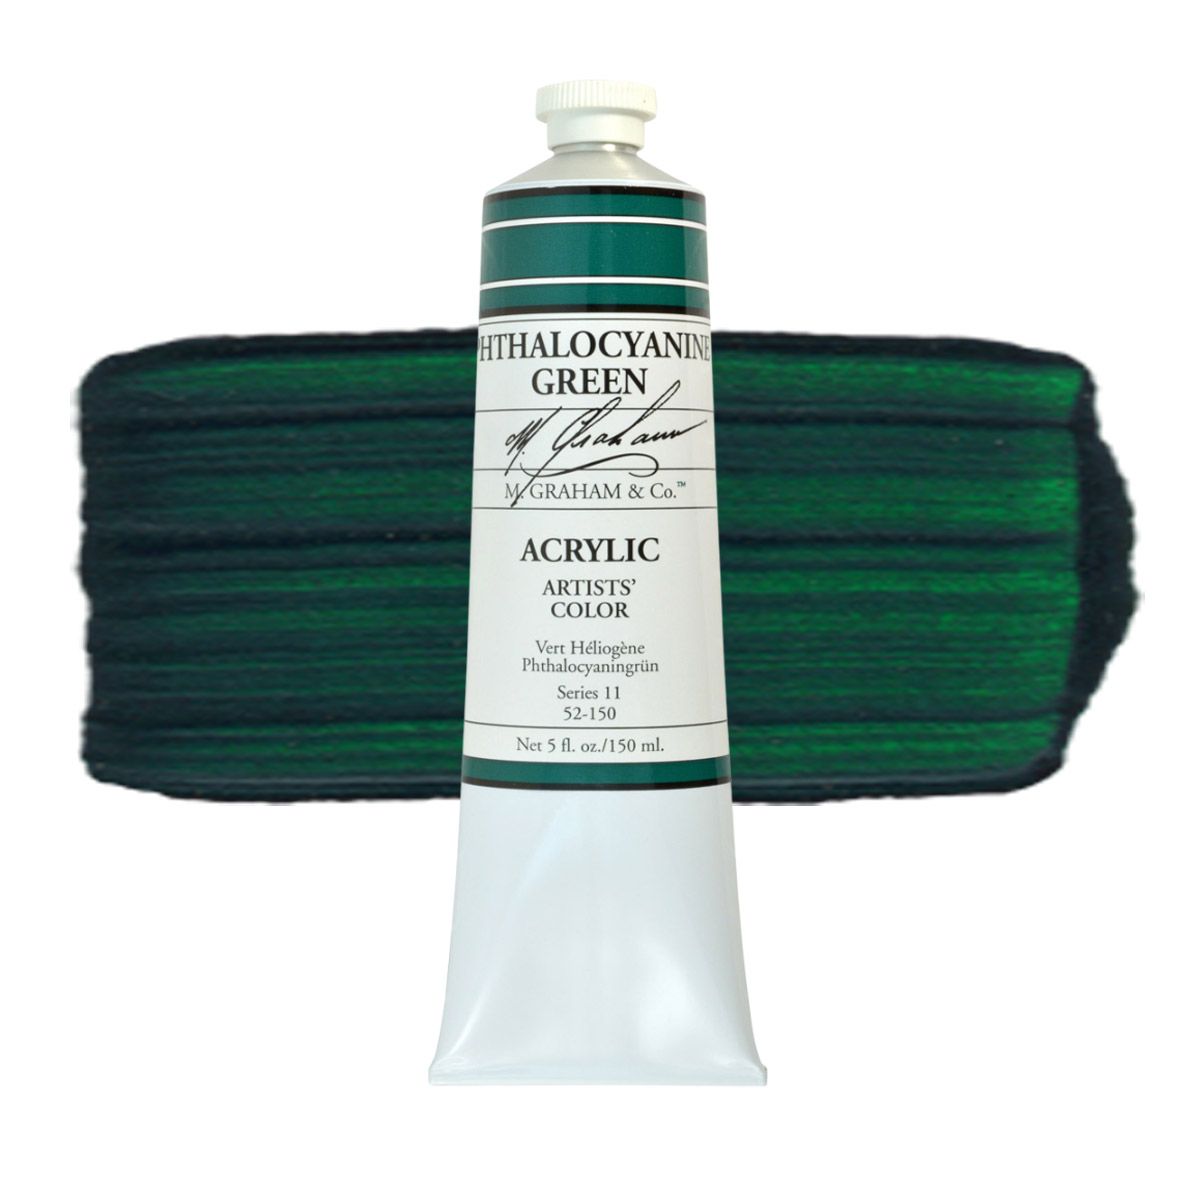 M Graham Acrylic - Phthalocyanine Green 150 ml